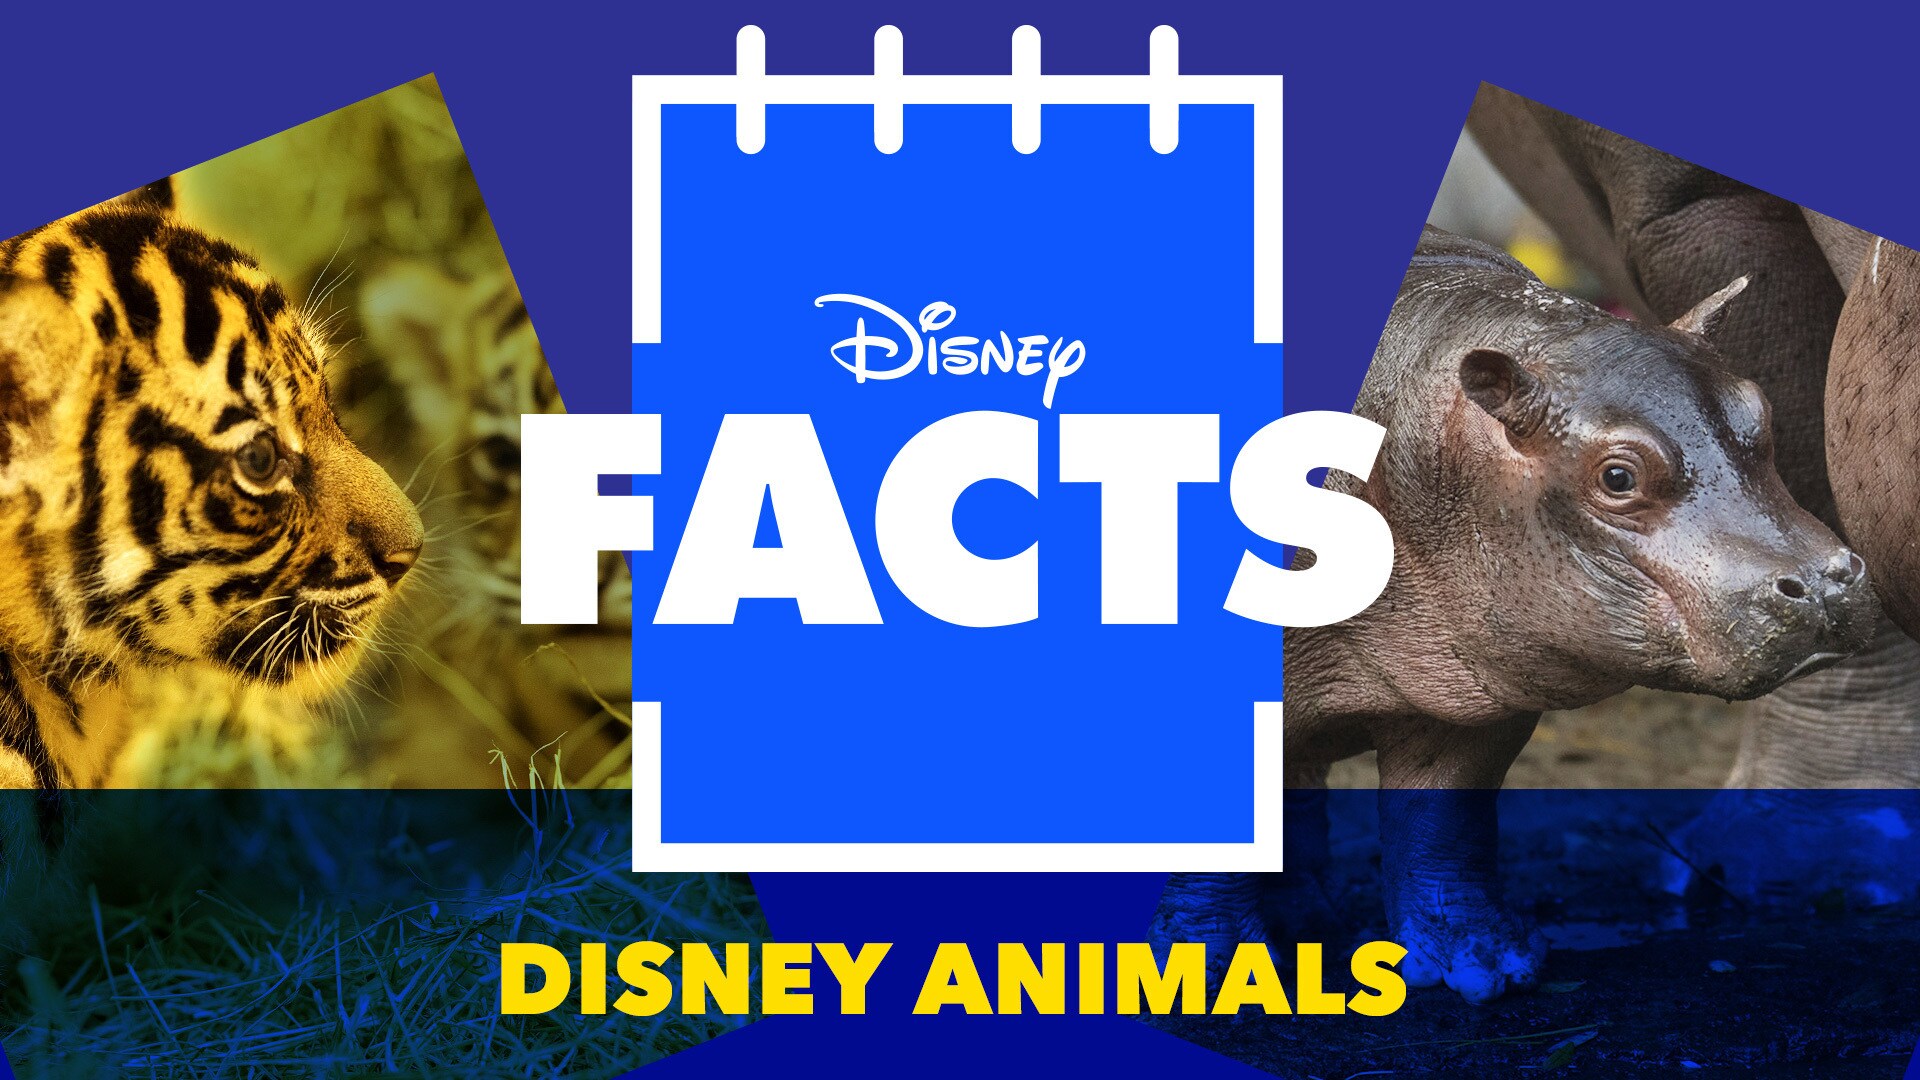 Meet the Animals from Disney's Animal Kingdom | Disney Facts by Disney